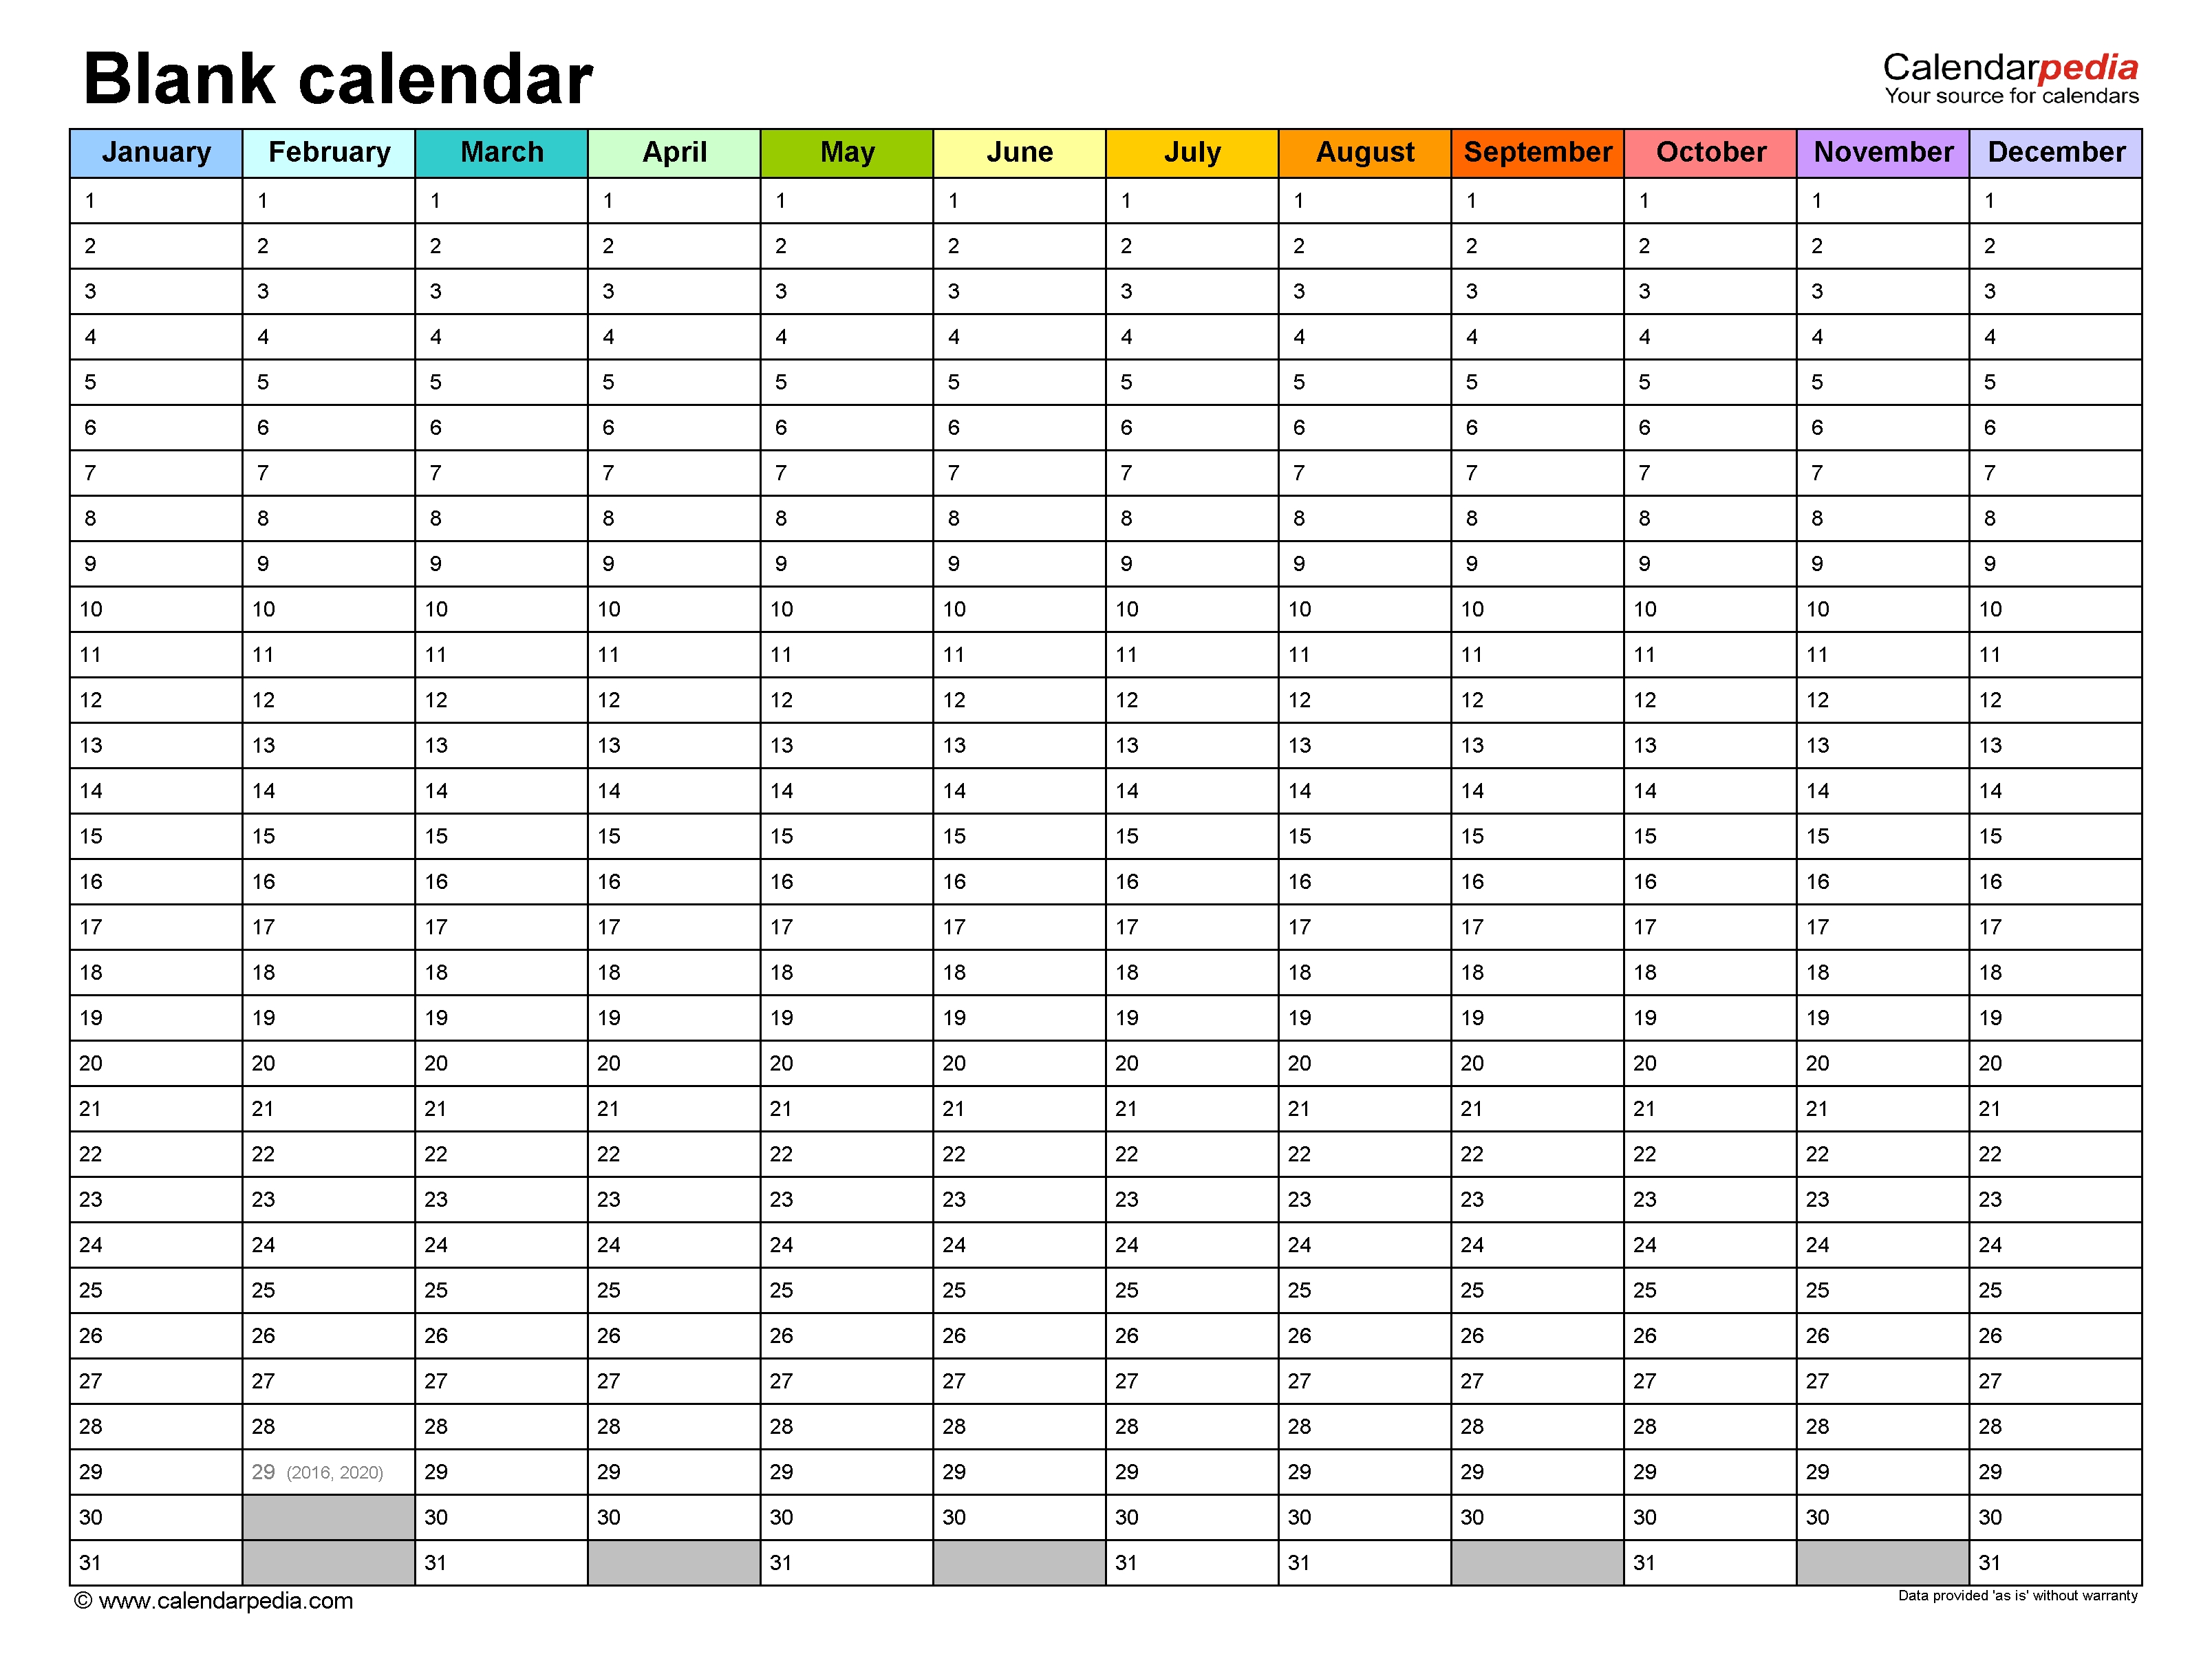 Blank Calendars - Free Printable Microsoft Word Templates Year Round Calendar Template